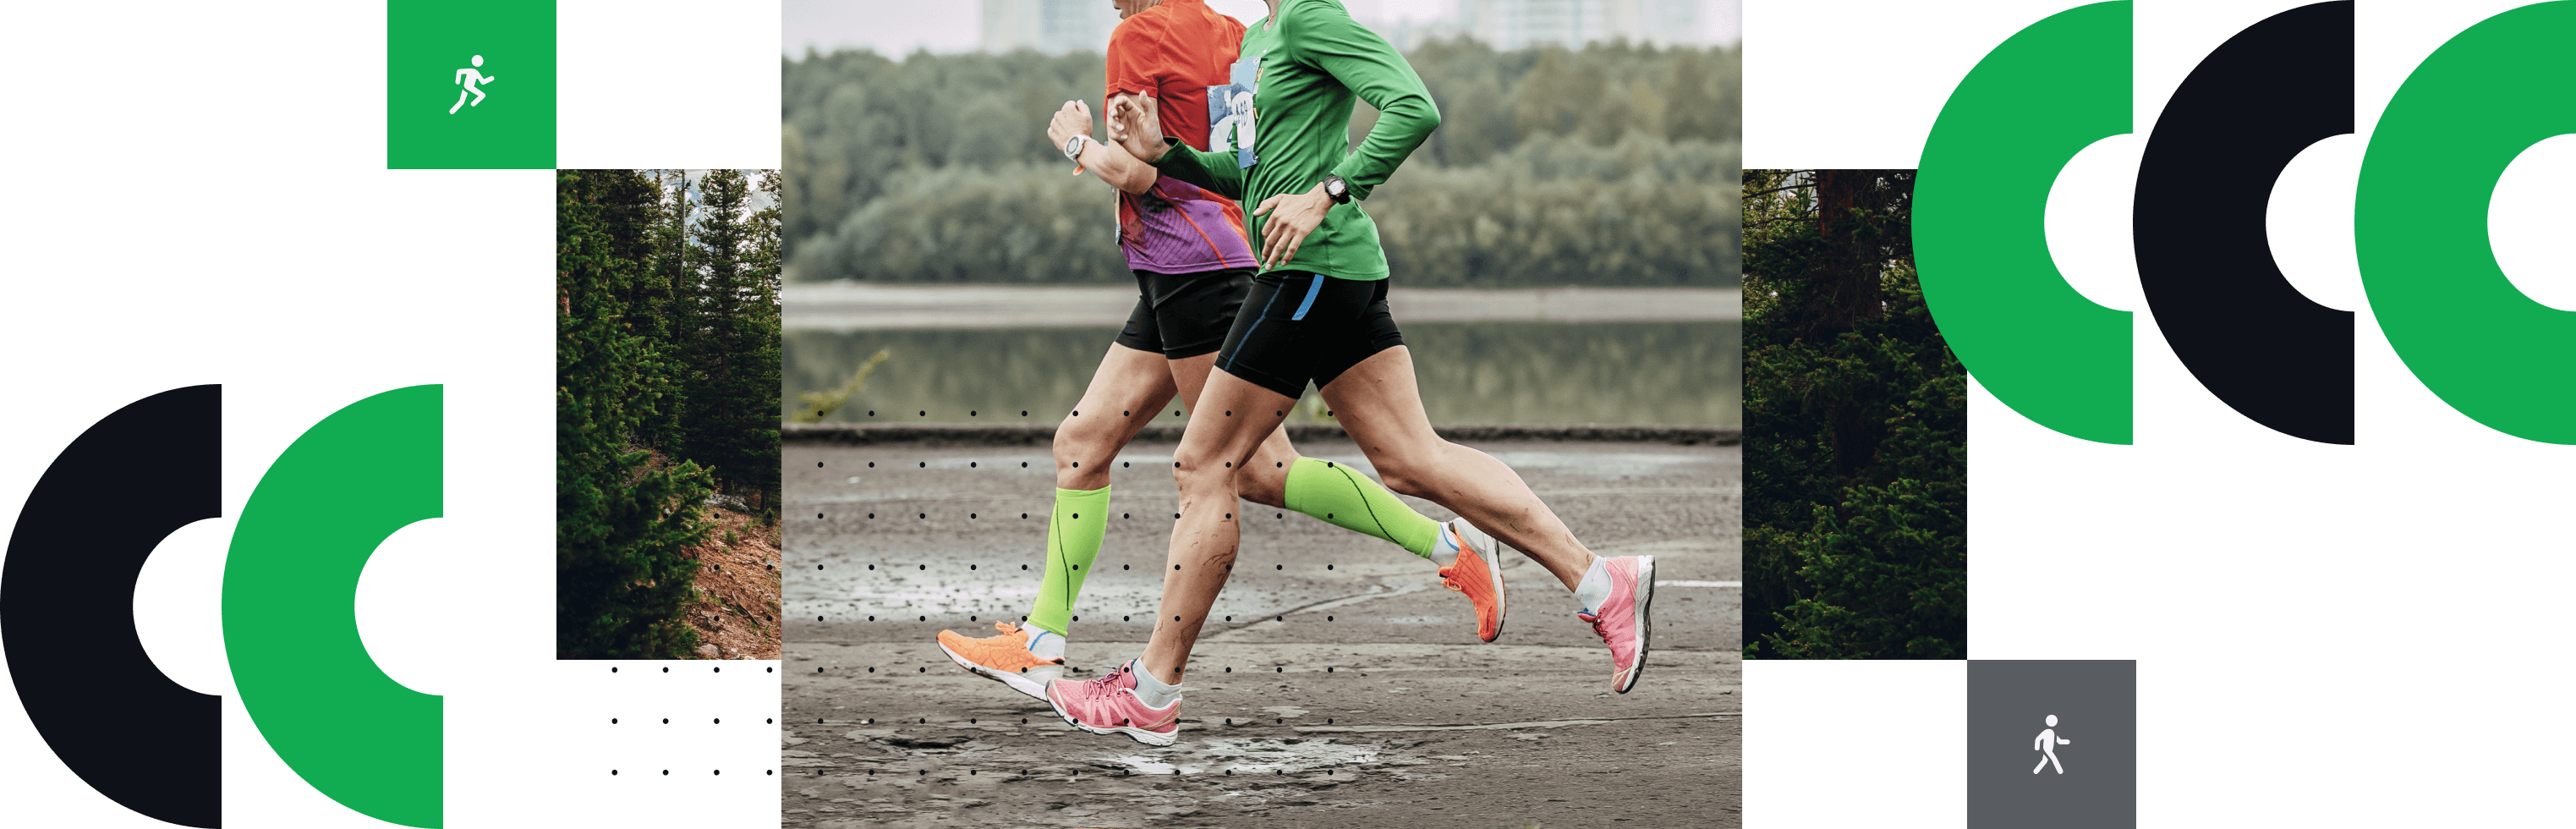 two people running a marathon